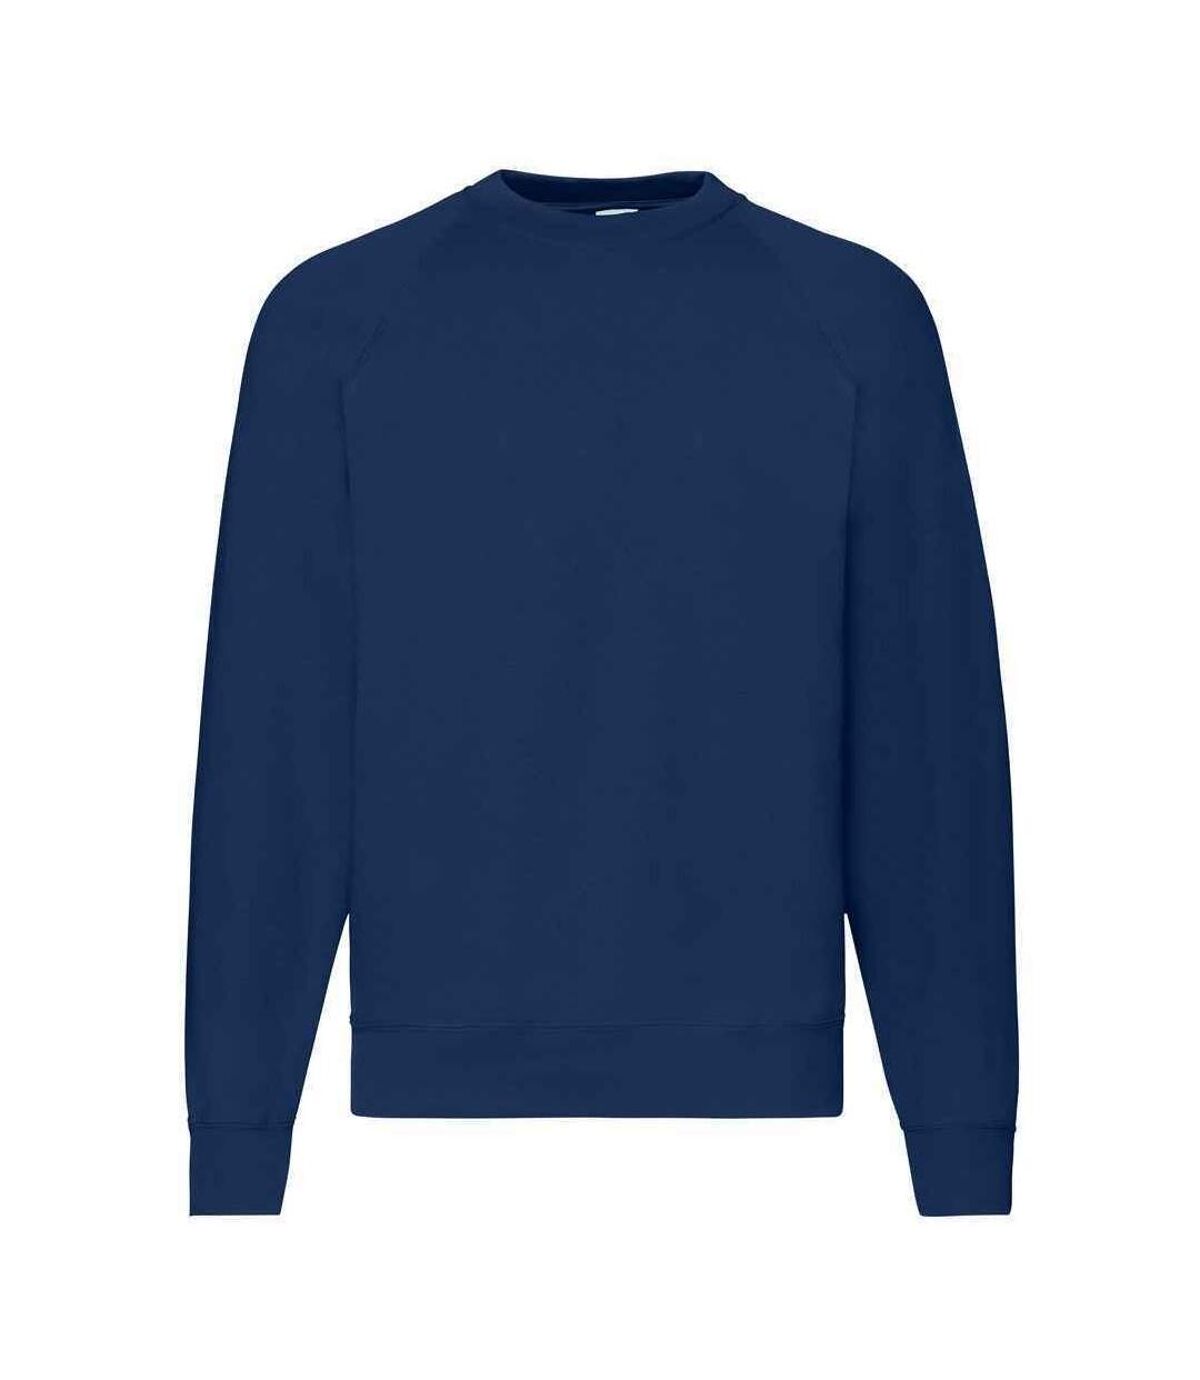 Fruit of the Loom Mens Classic Sweatshirt (Navy)